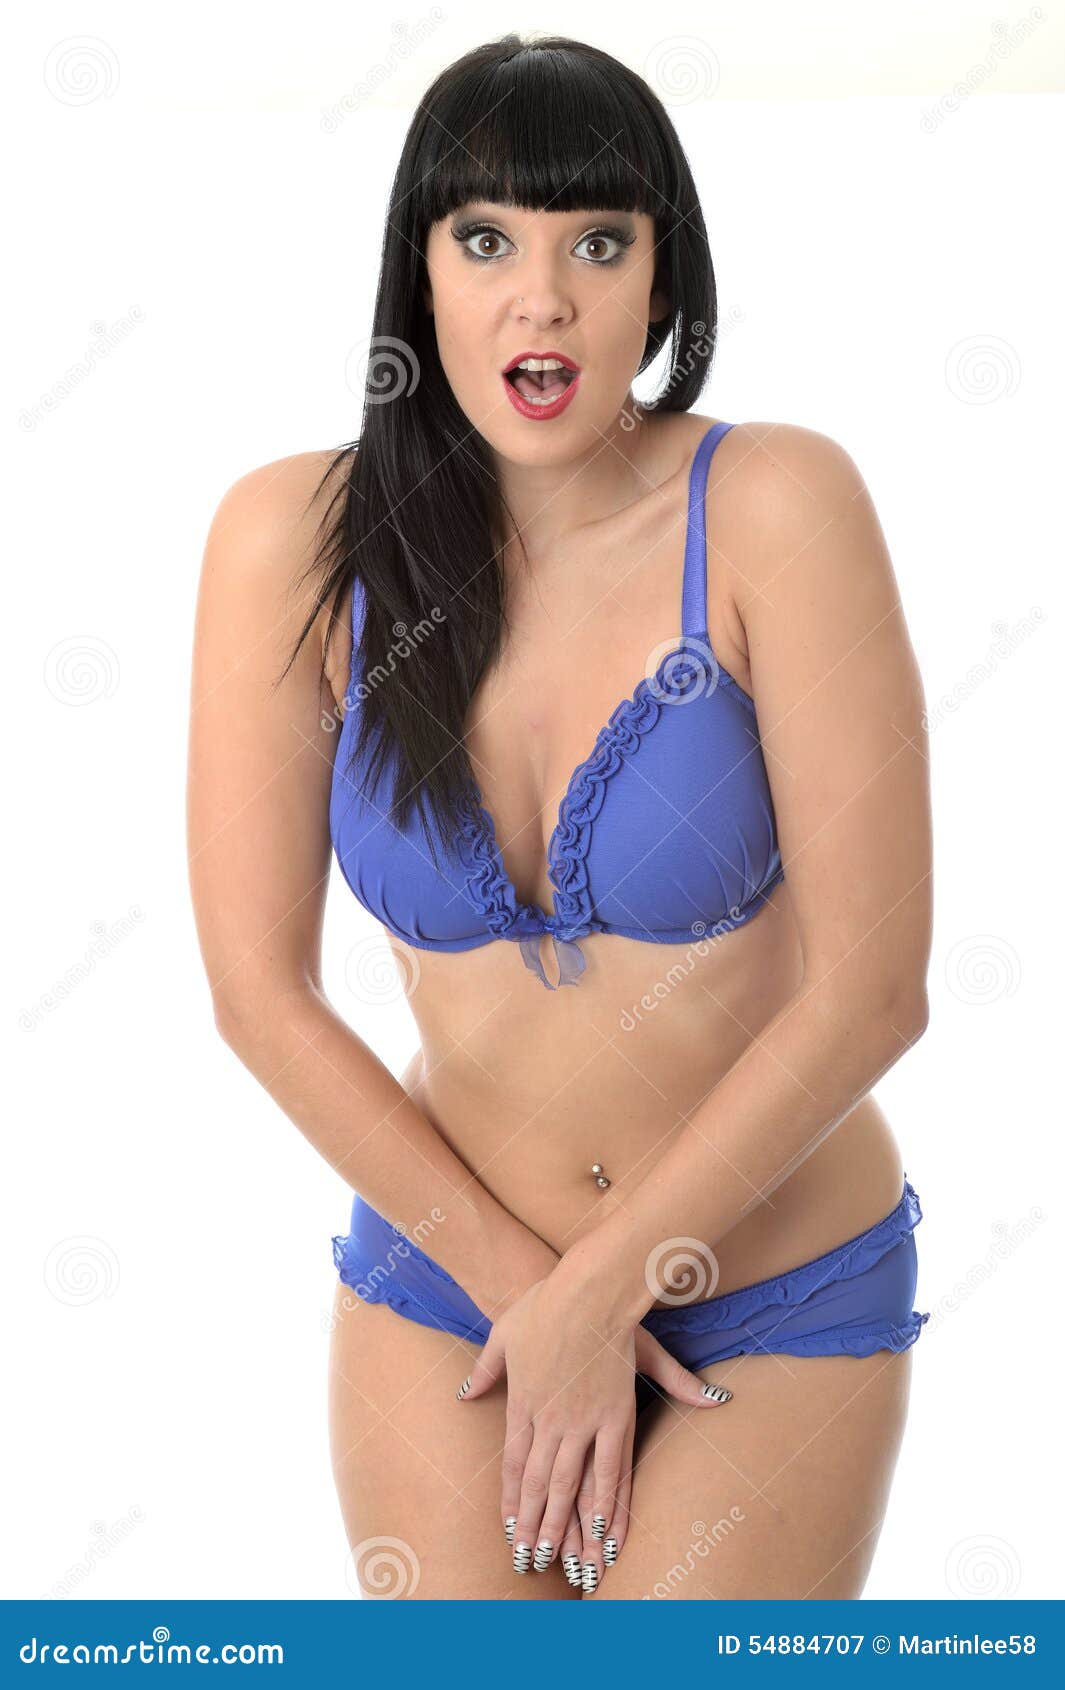 billyjoe young add embarrassed girl in underwear photo